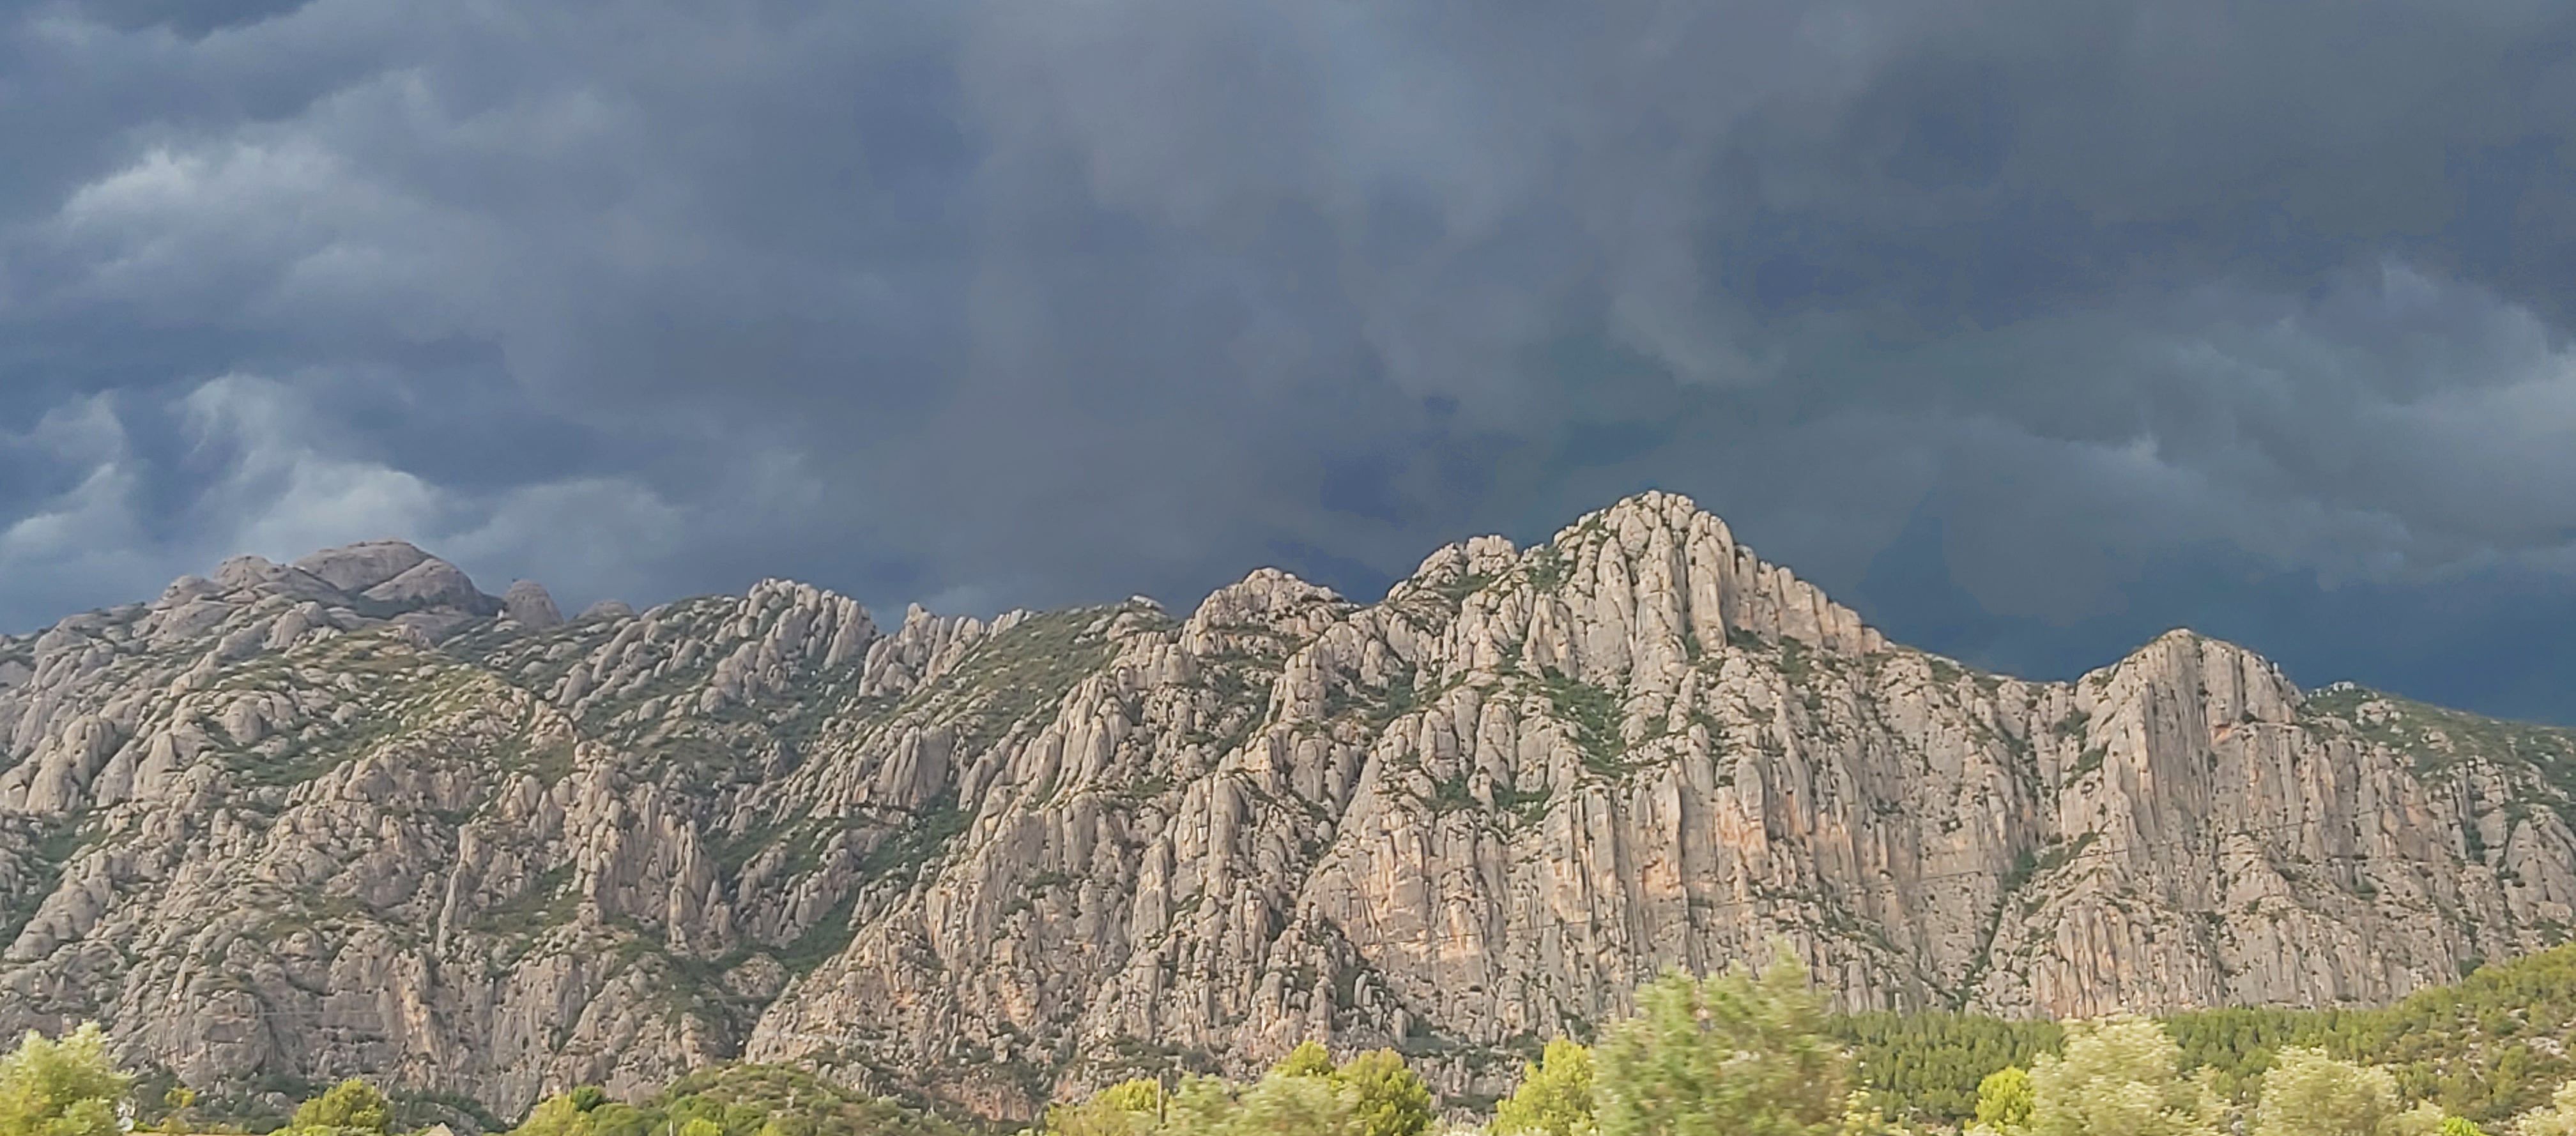 La tempesta ve de Montserrat · Collbató FOTO: Judit Güell Torné